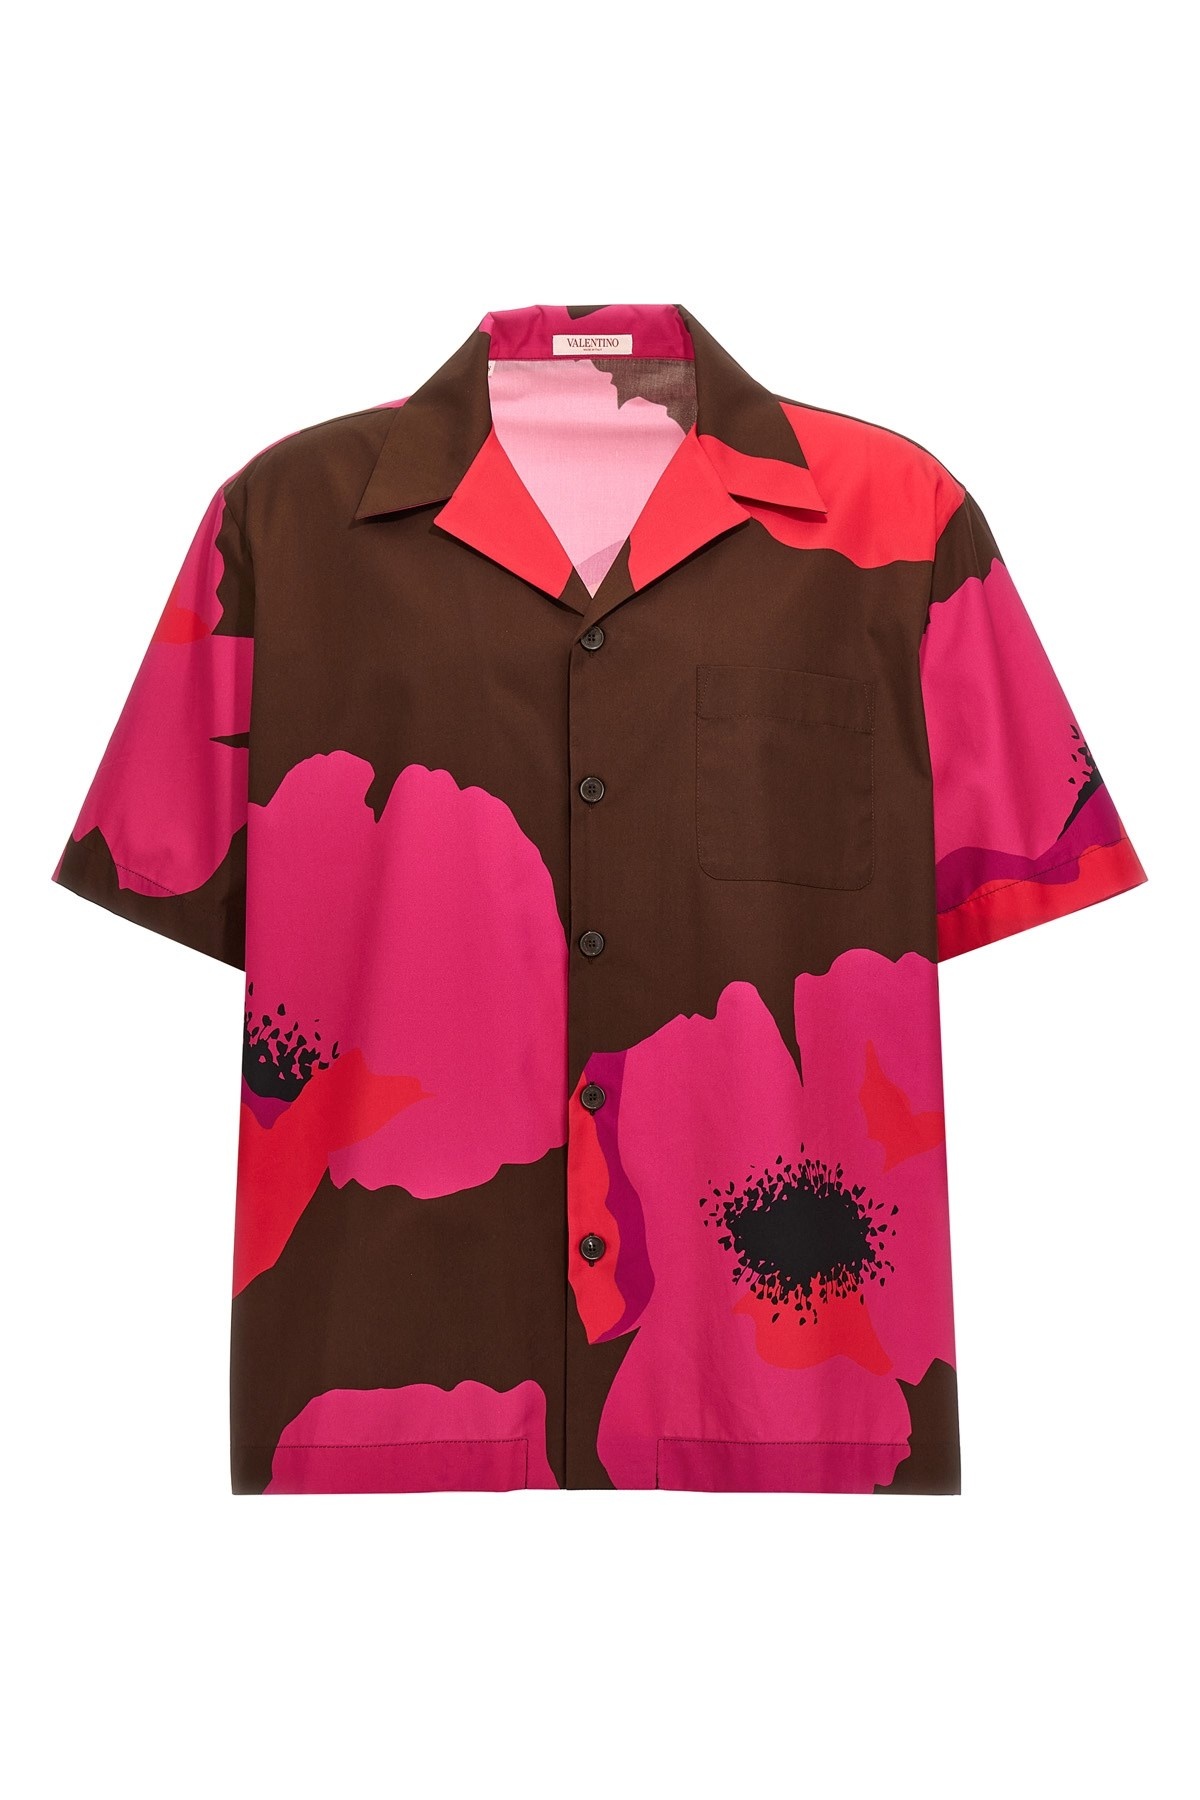 Valentino floral print shirt - 1